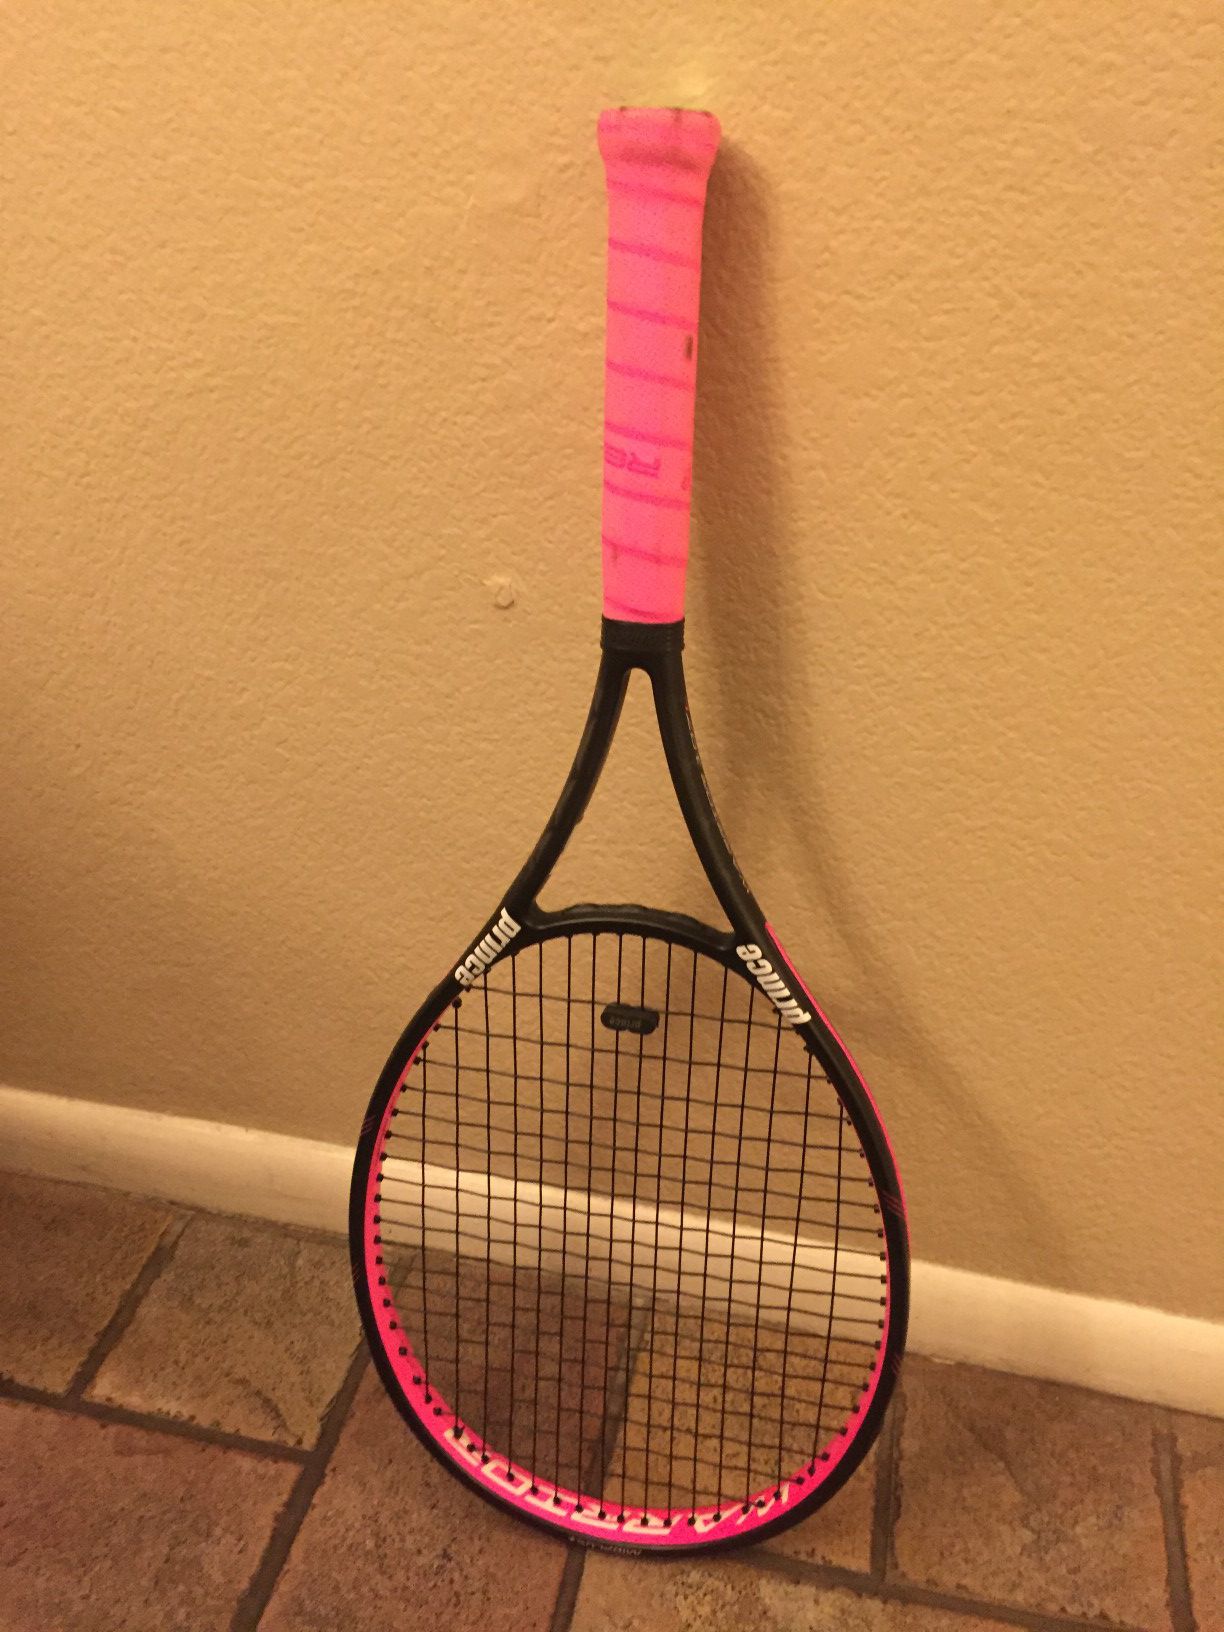 Brand New tennis racket